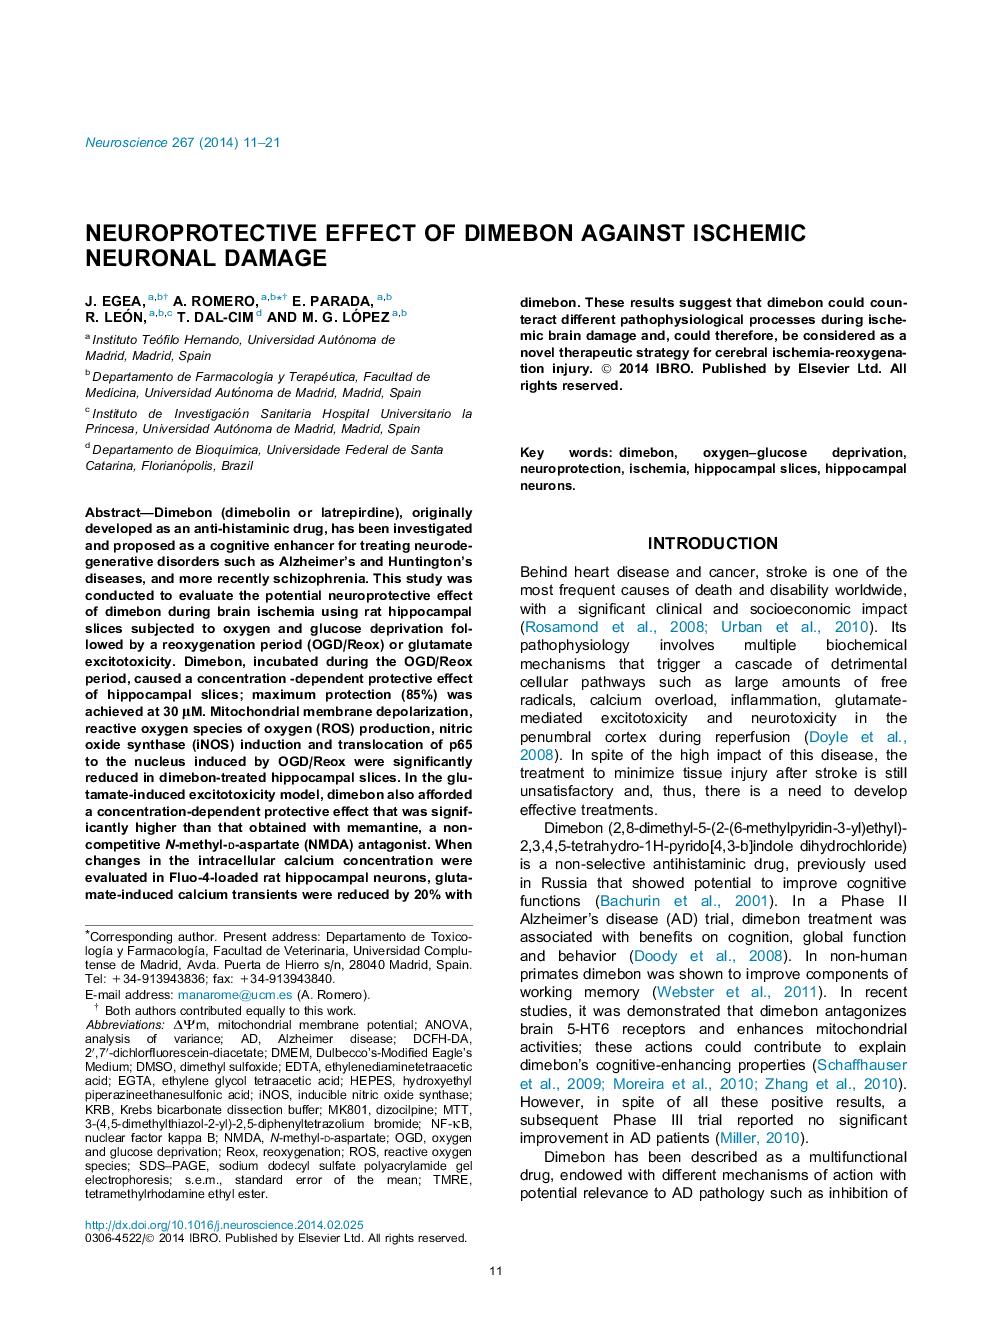 Neuroprotective effect of dimebon against ischemic neuronal damage